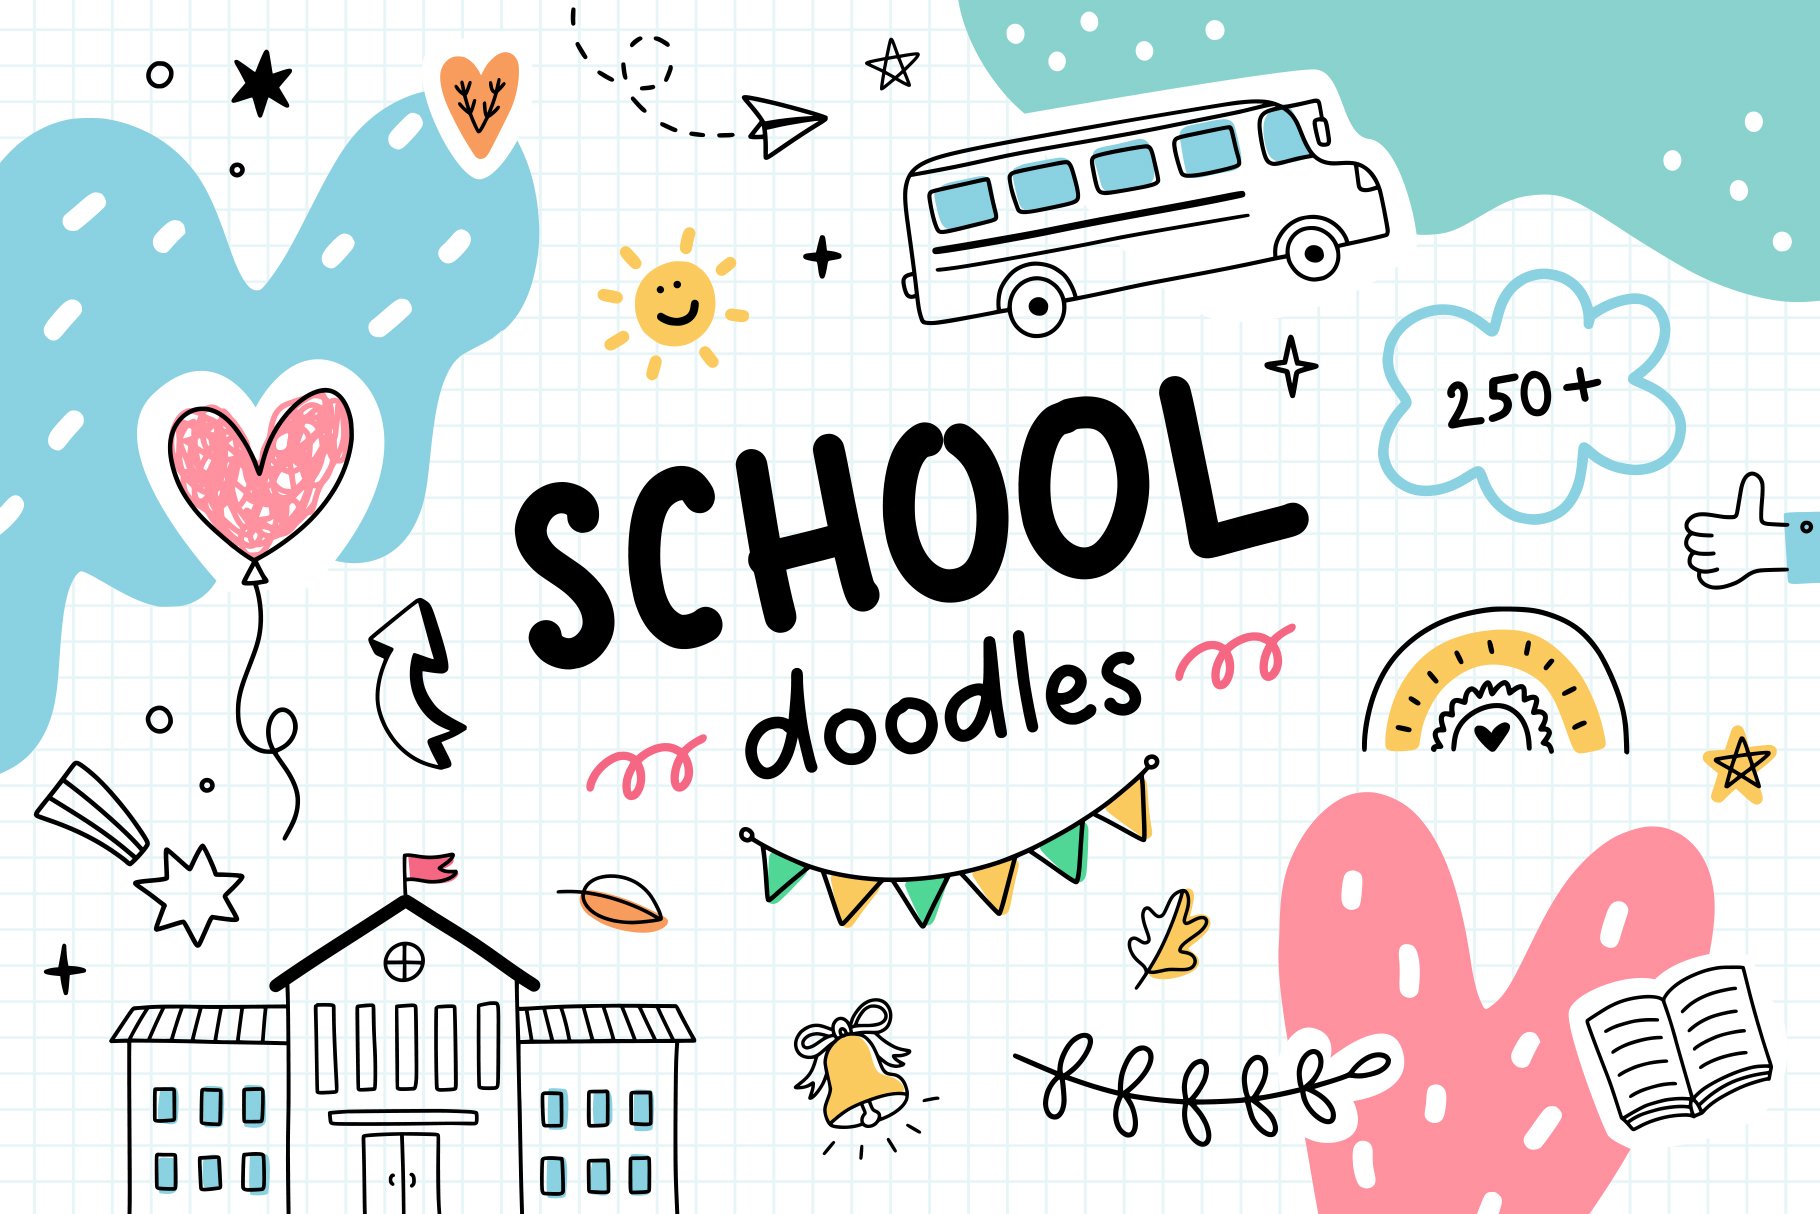 School Doodles cover image.